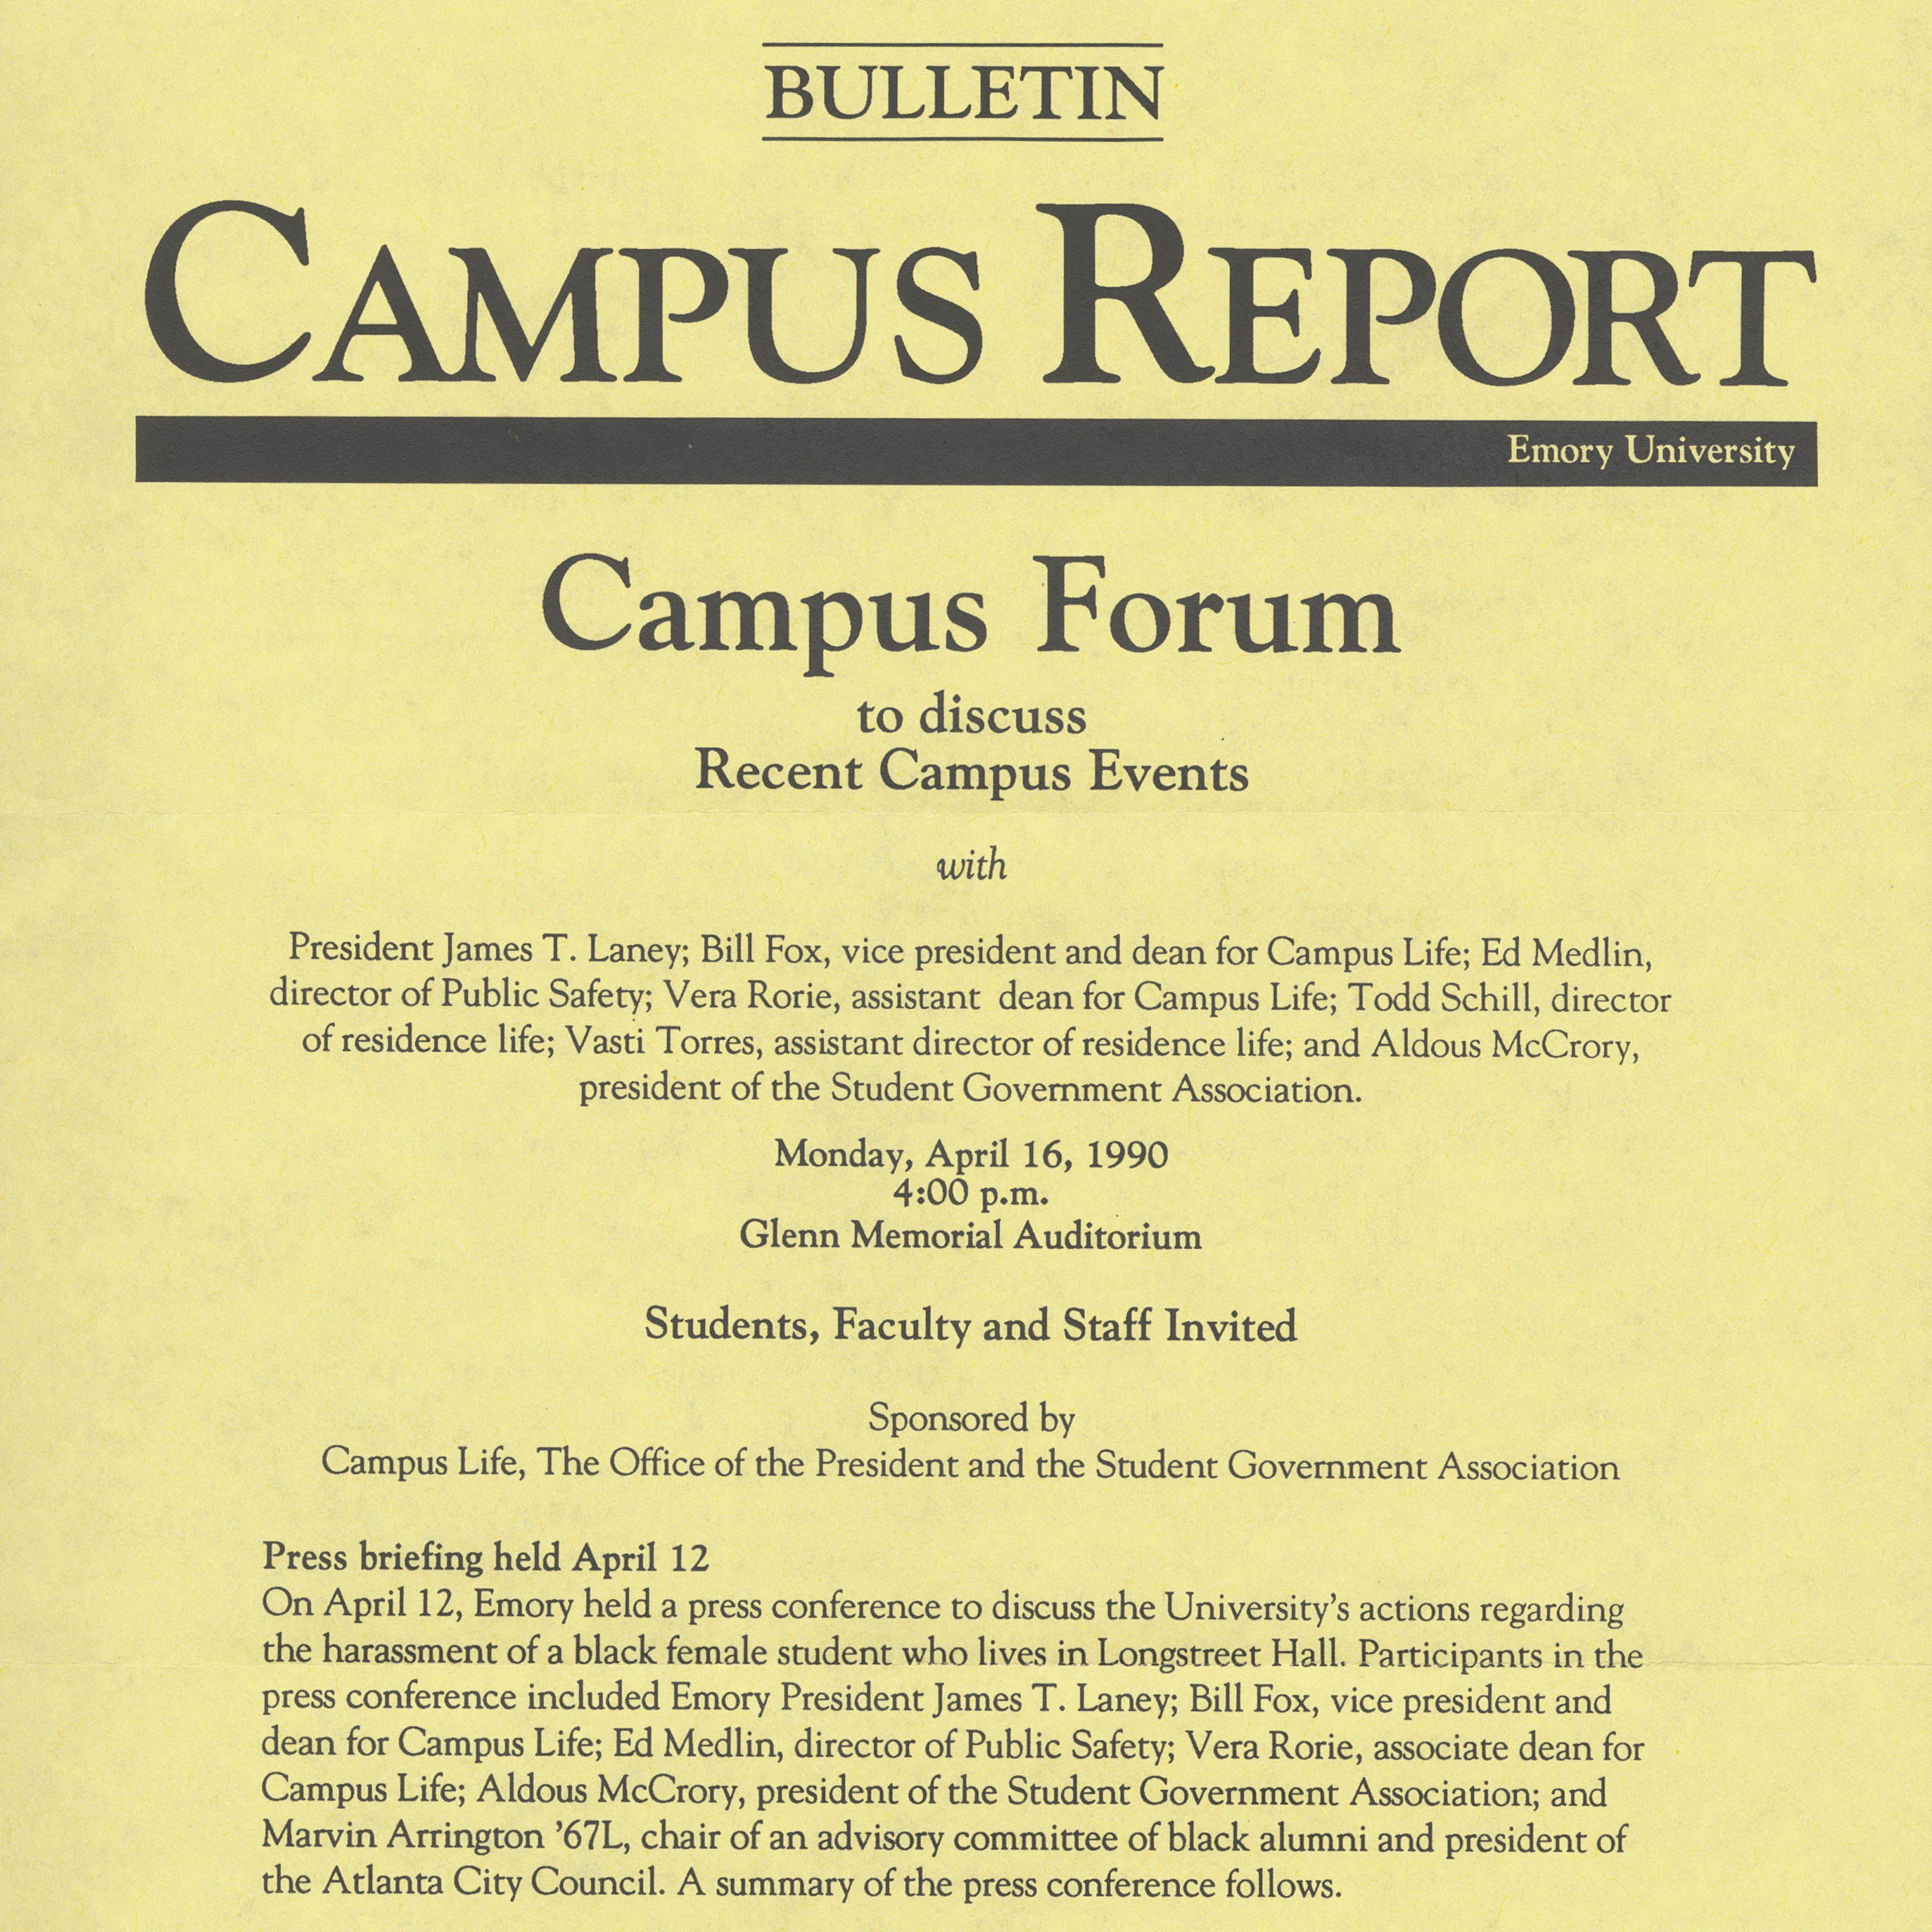 Bulletin for "Campus Forum to discuss Recent Campus Events"